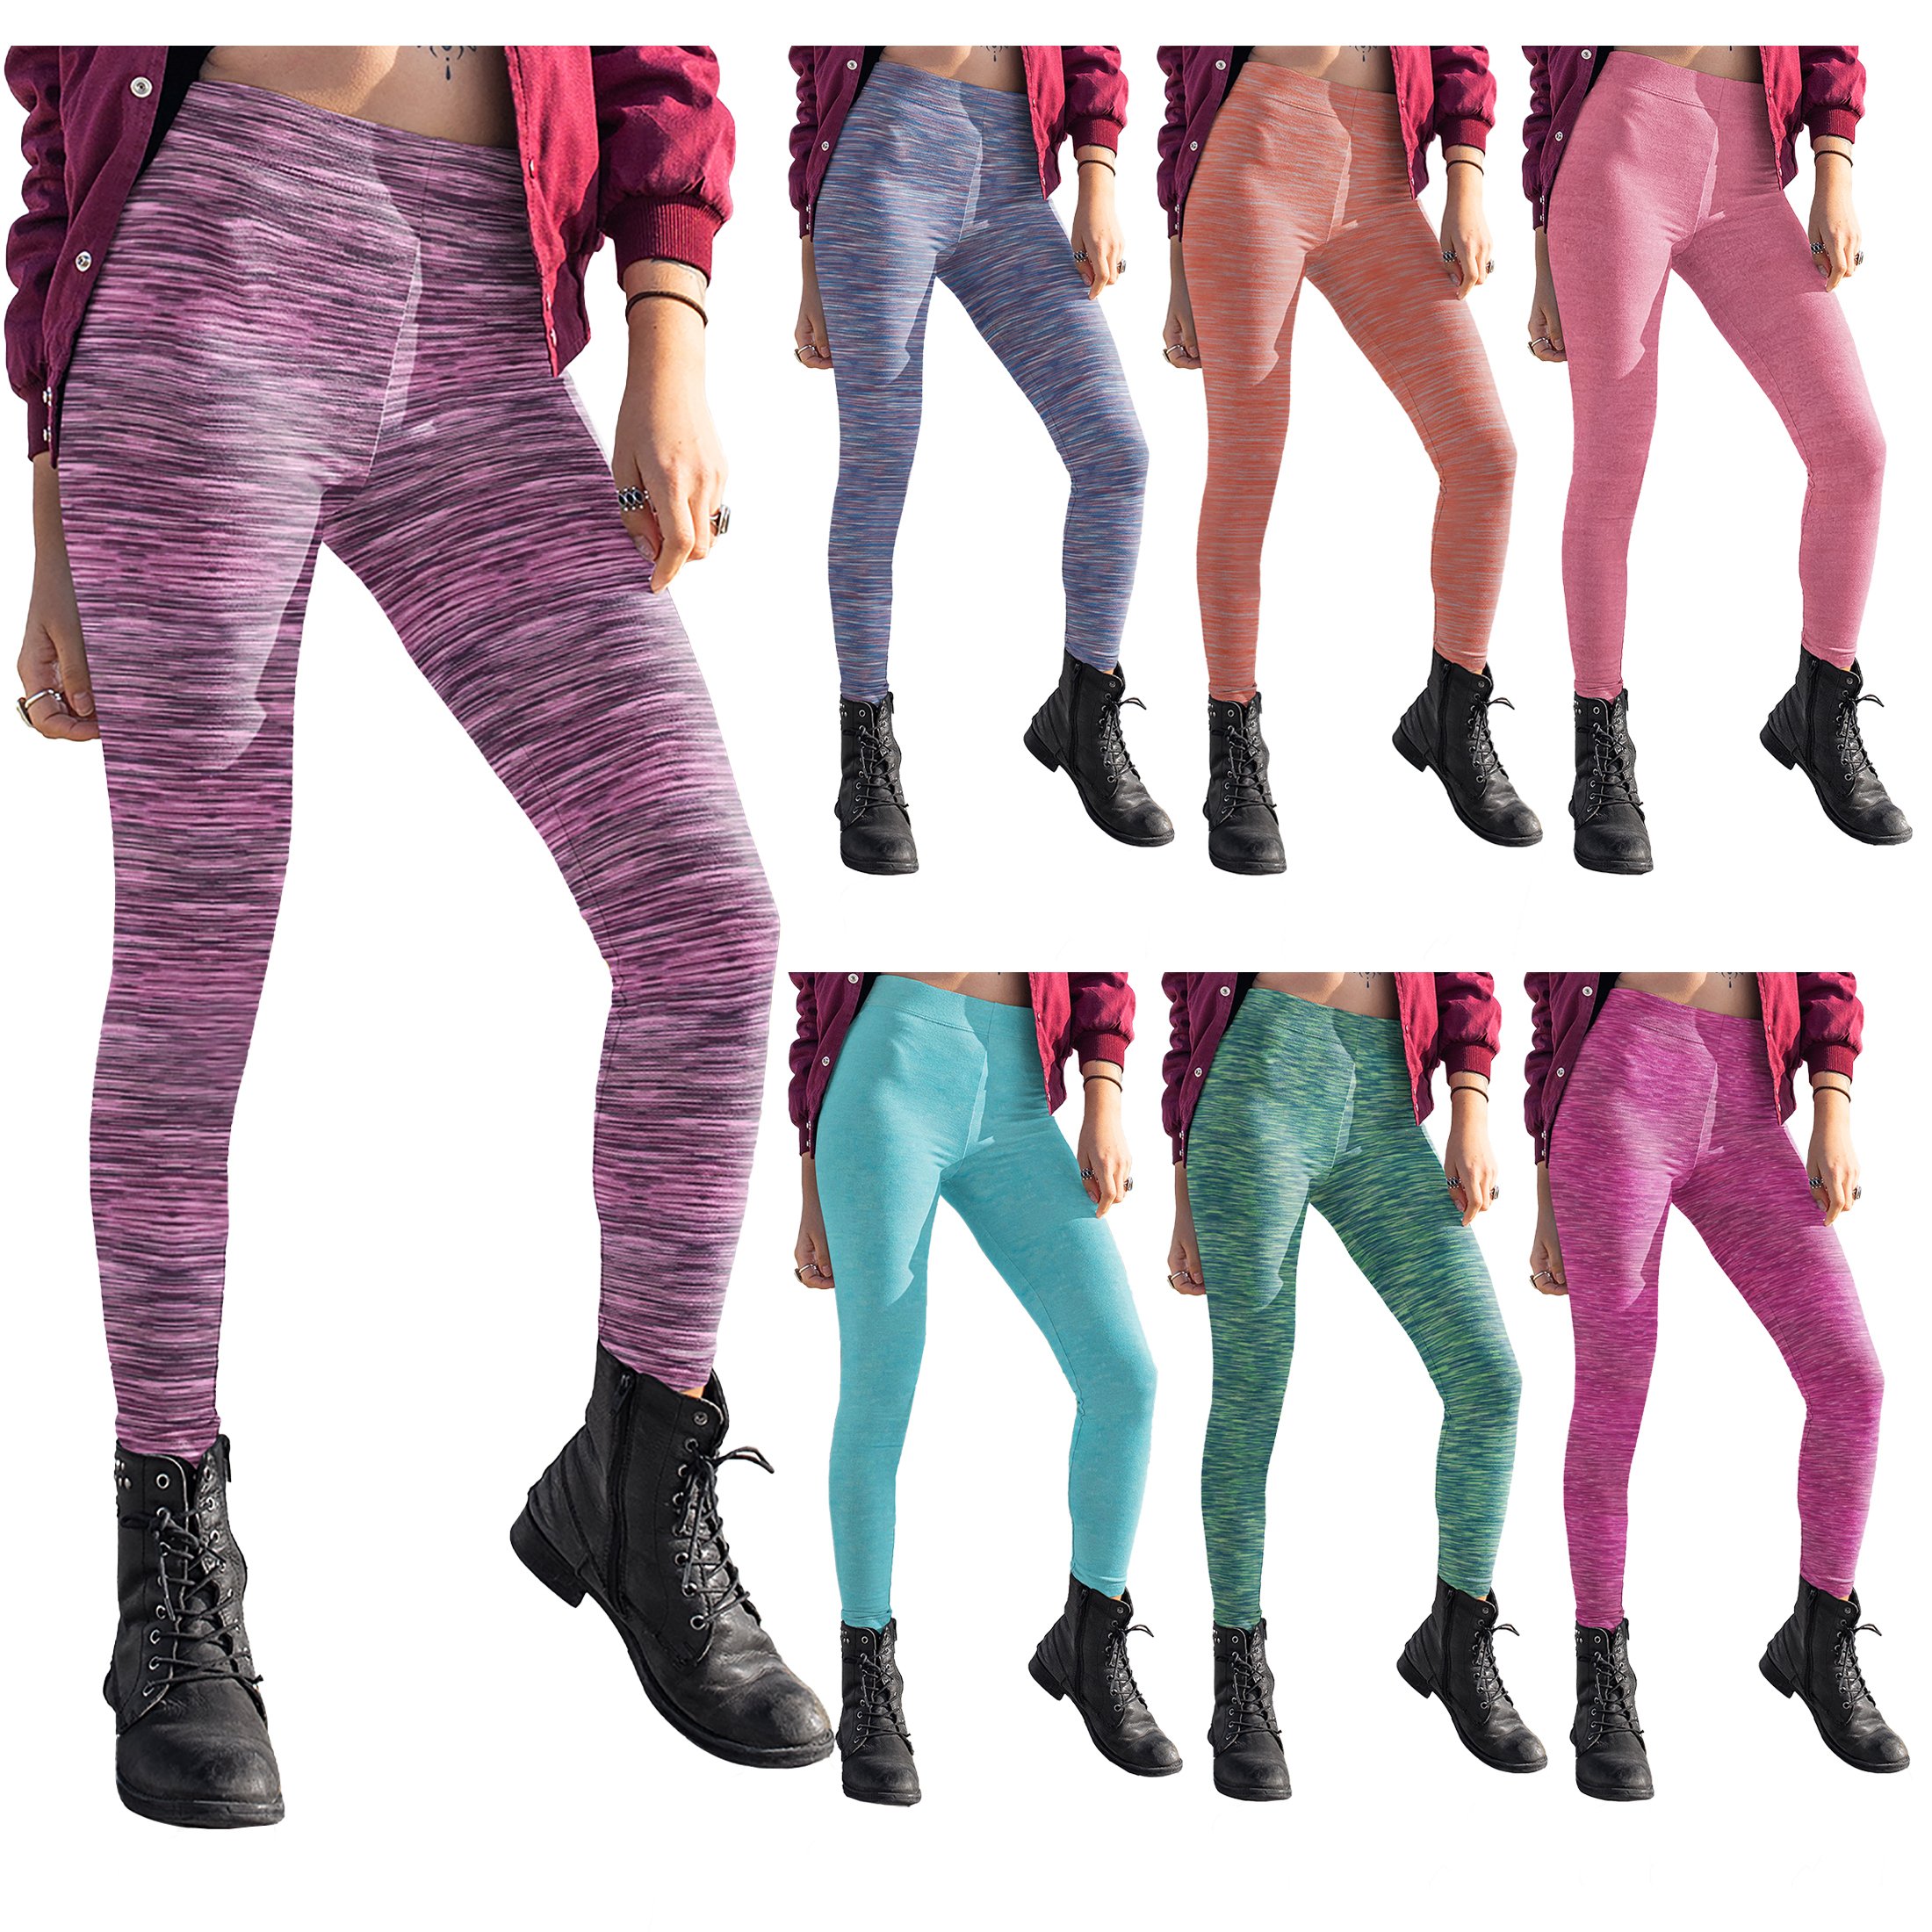 2-Pack: Women's Space Dye Seamless Leggings - X-Small